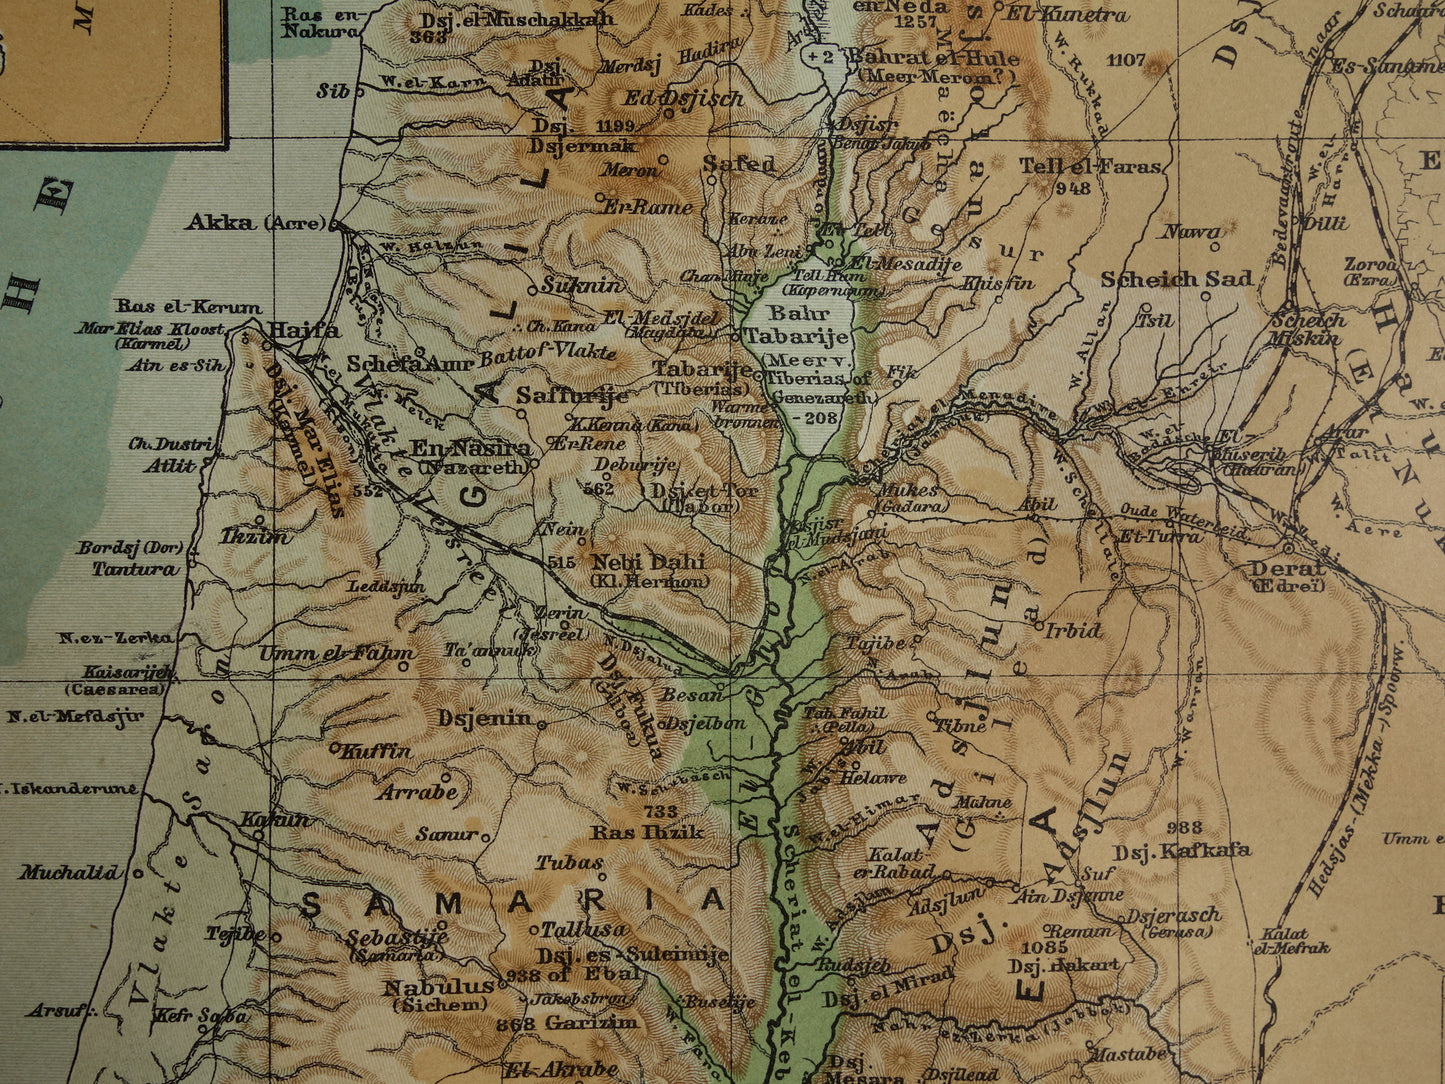 Oude landkaart van Israël Libanon Palestina Syrië uit 1910 originele Nederlandse antieke kaart Jeruzalem Juda